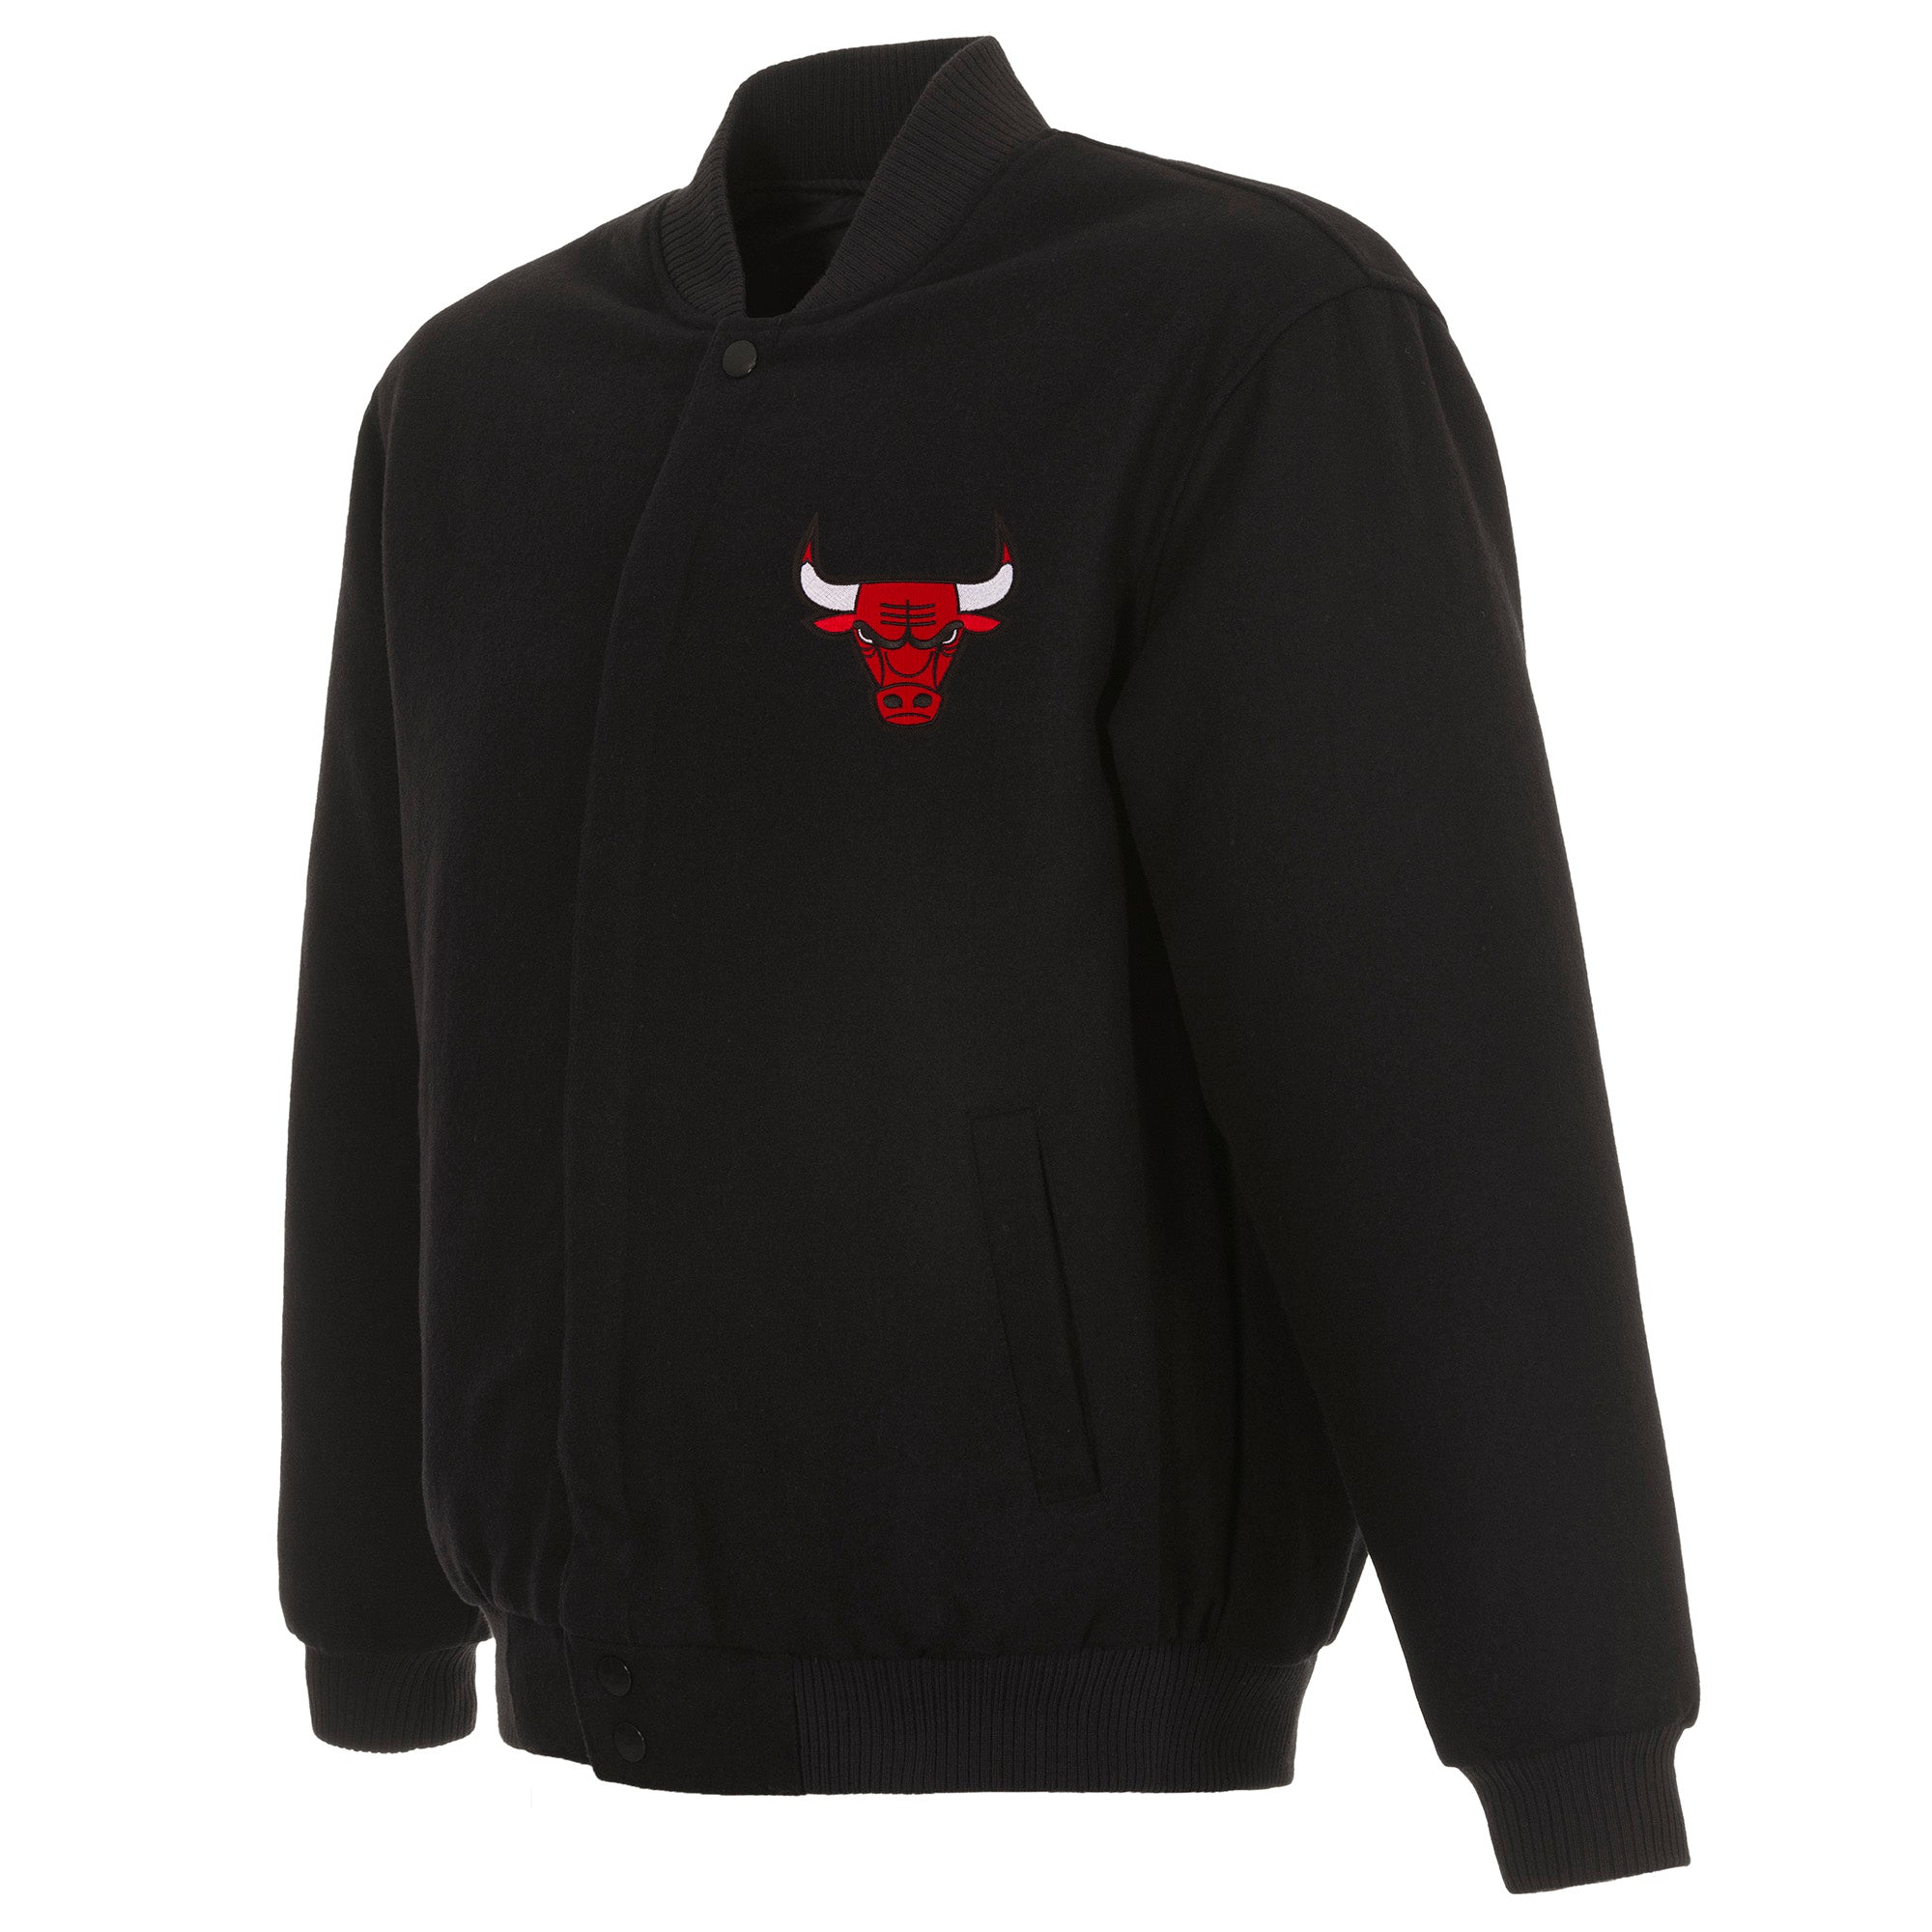 JH Design Men's Chicago Bulls Black Reversible Wool Jacket, Medium